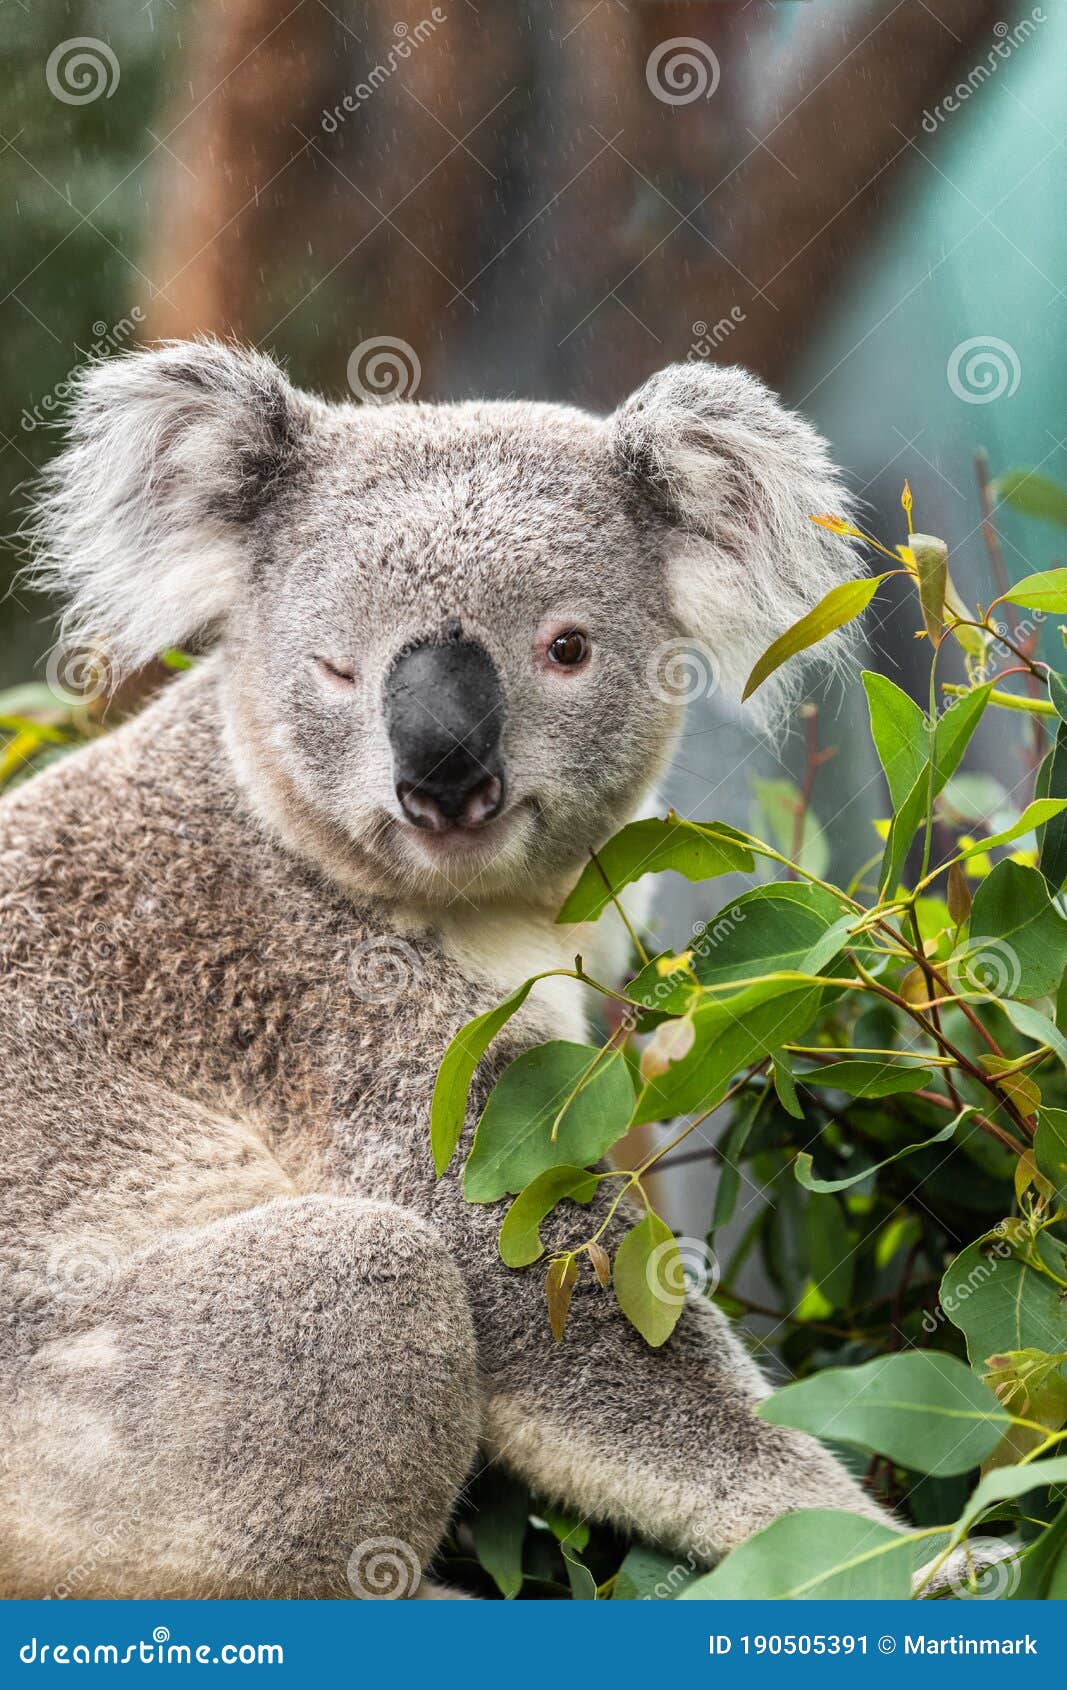 Funny Koala Animal Winking Blinking Cute Wink at Camera at Sydney Zoo in  Australia. Australia Wildlife Animals Stock Image - Image of endangered,  blink: 190505391